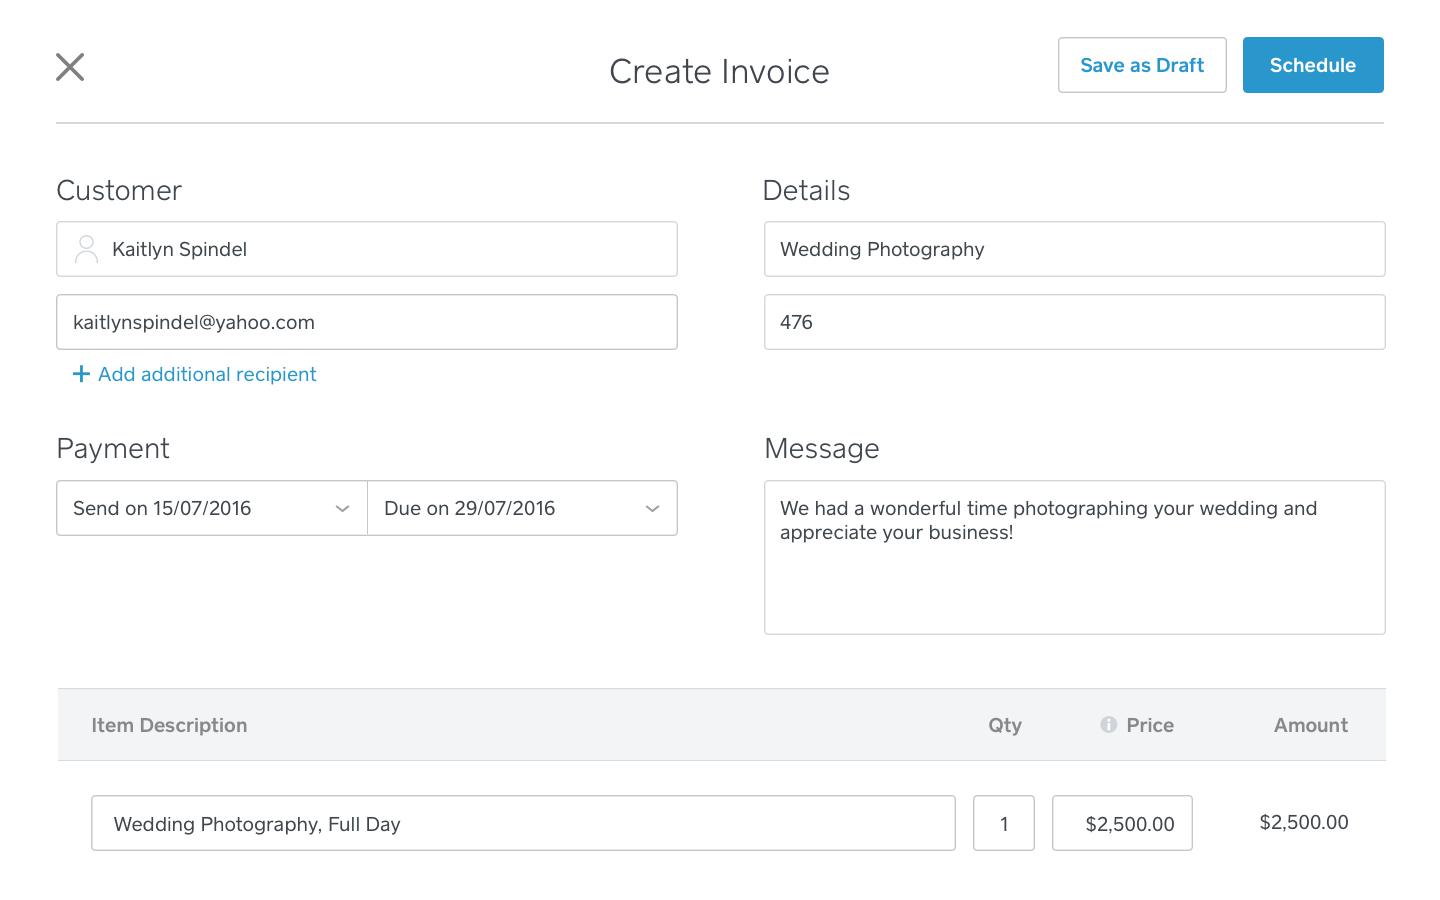 Create invoice